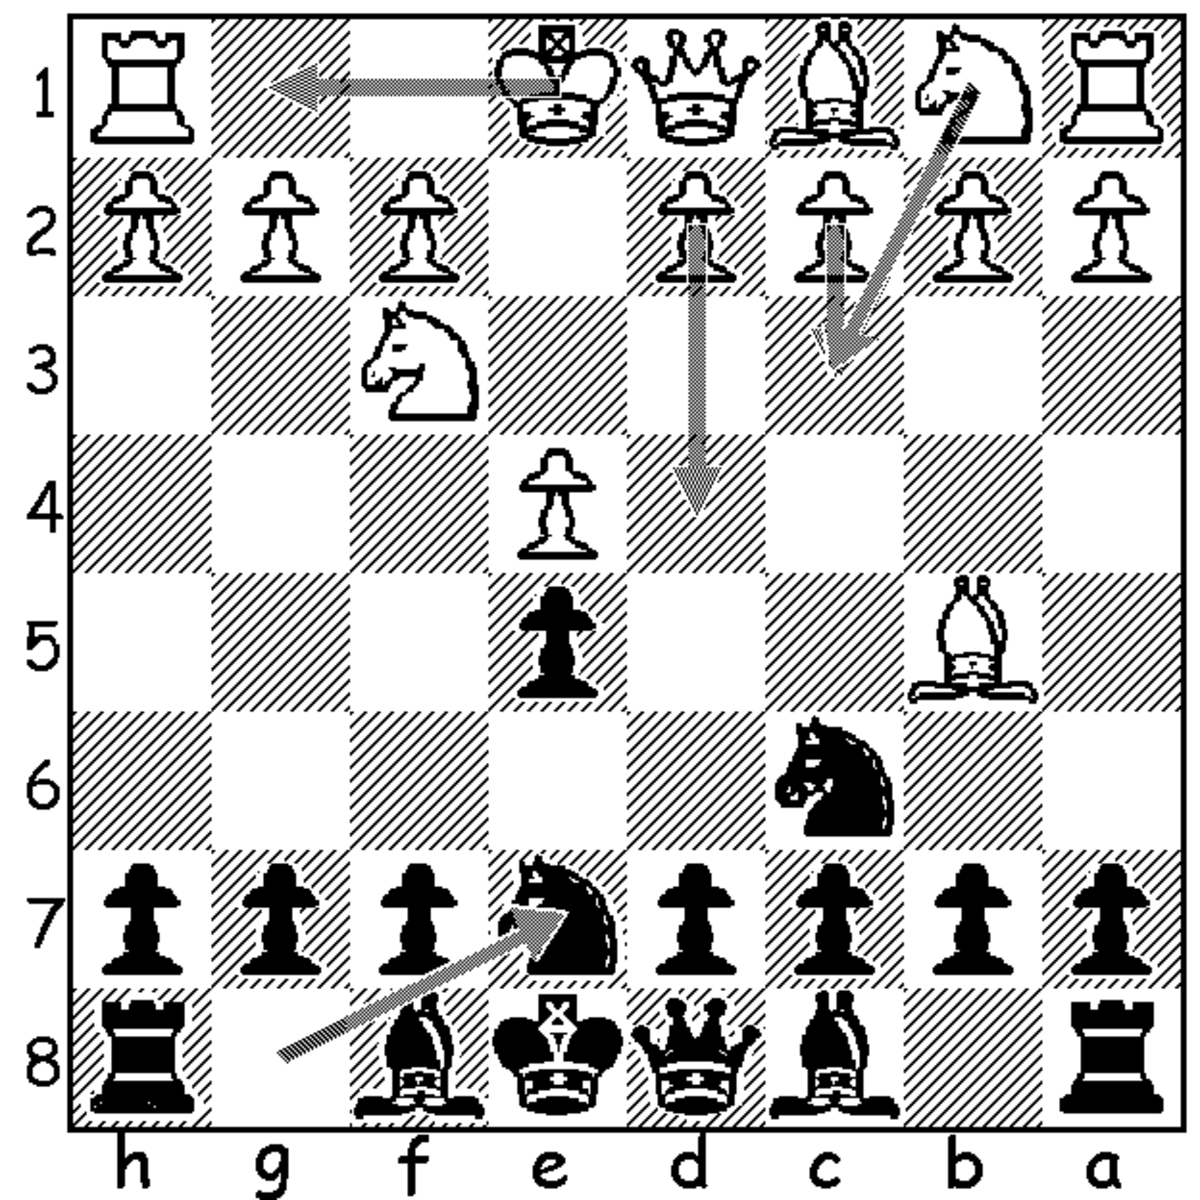 Ruy lopez chess opening pdf